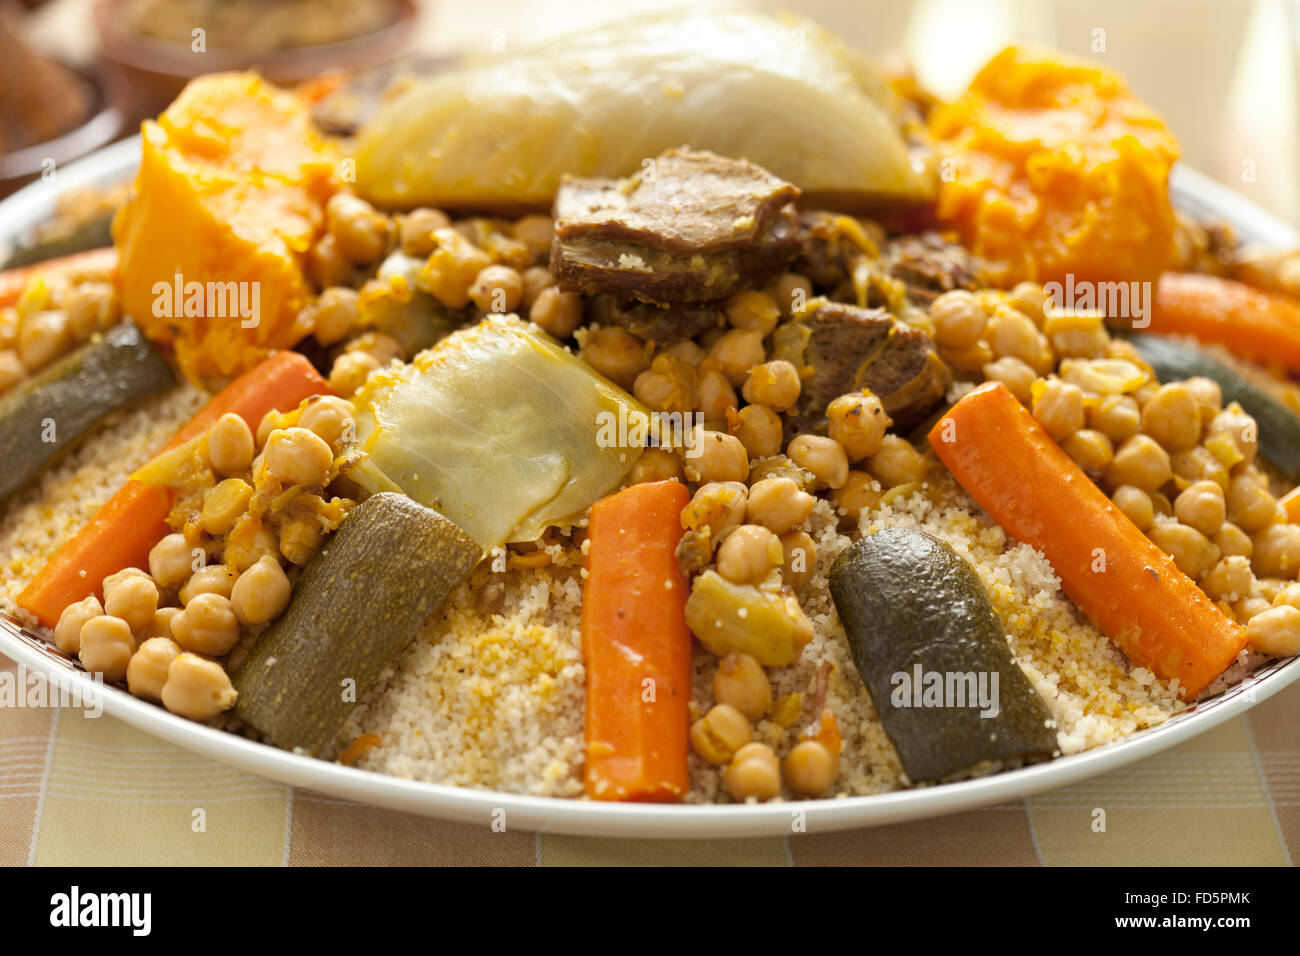 Marokkanischer Couscous Gericht hautnah Stockfotografie - Alamy